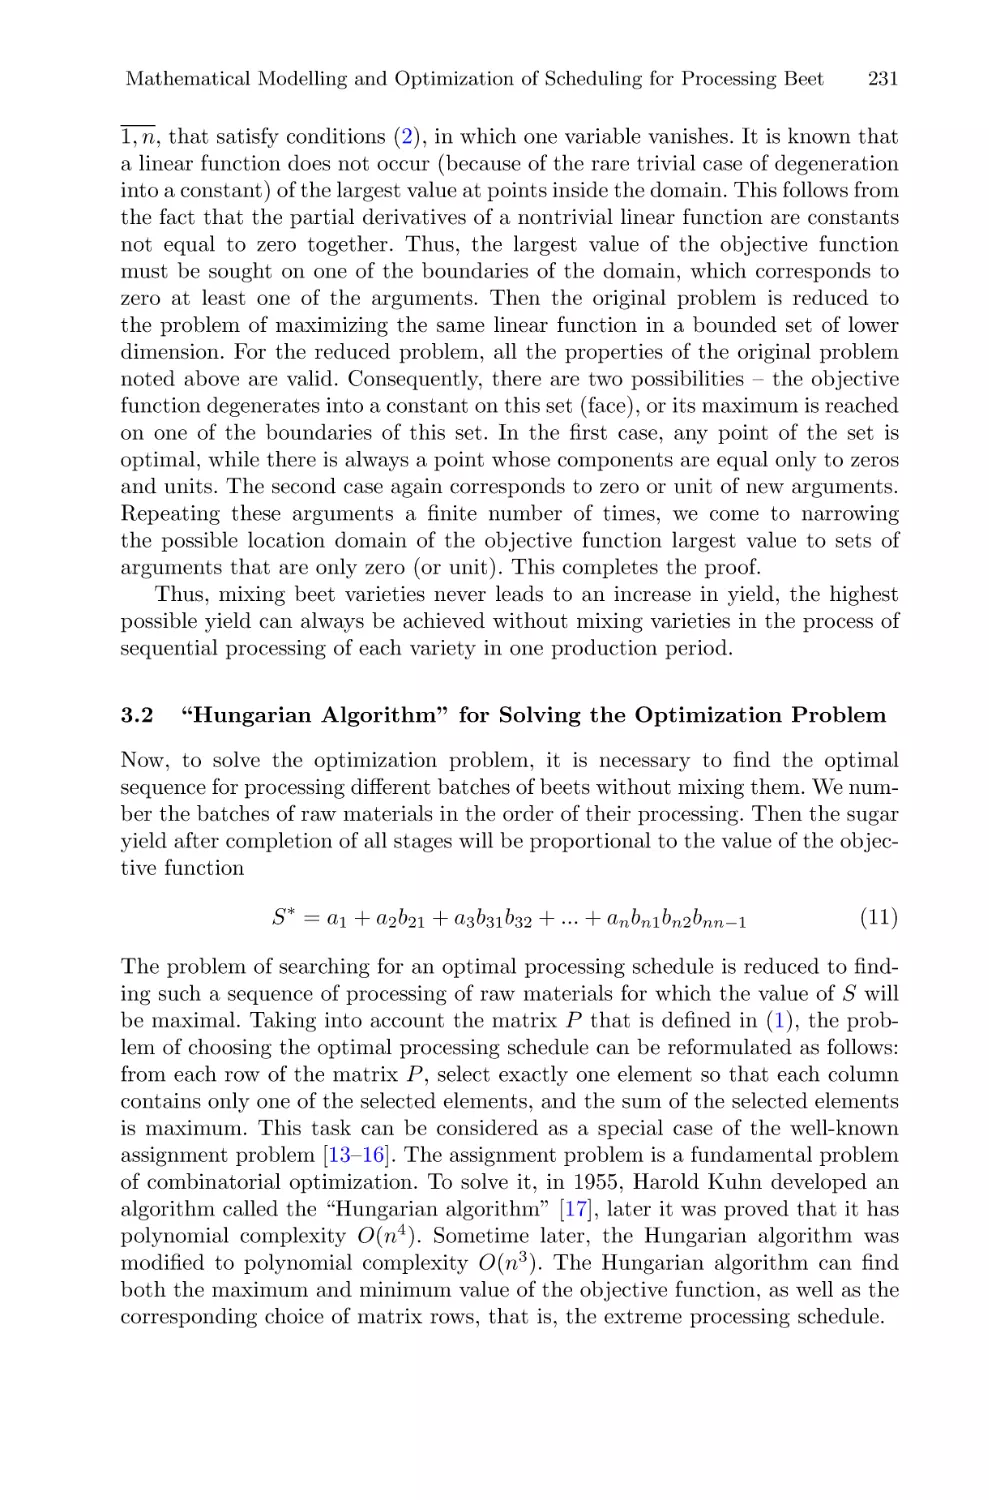 3.2 ``Hungarian Algorithm'' for Solving the Optimization Problem